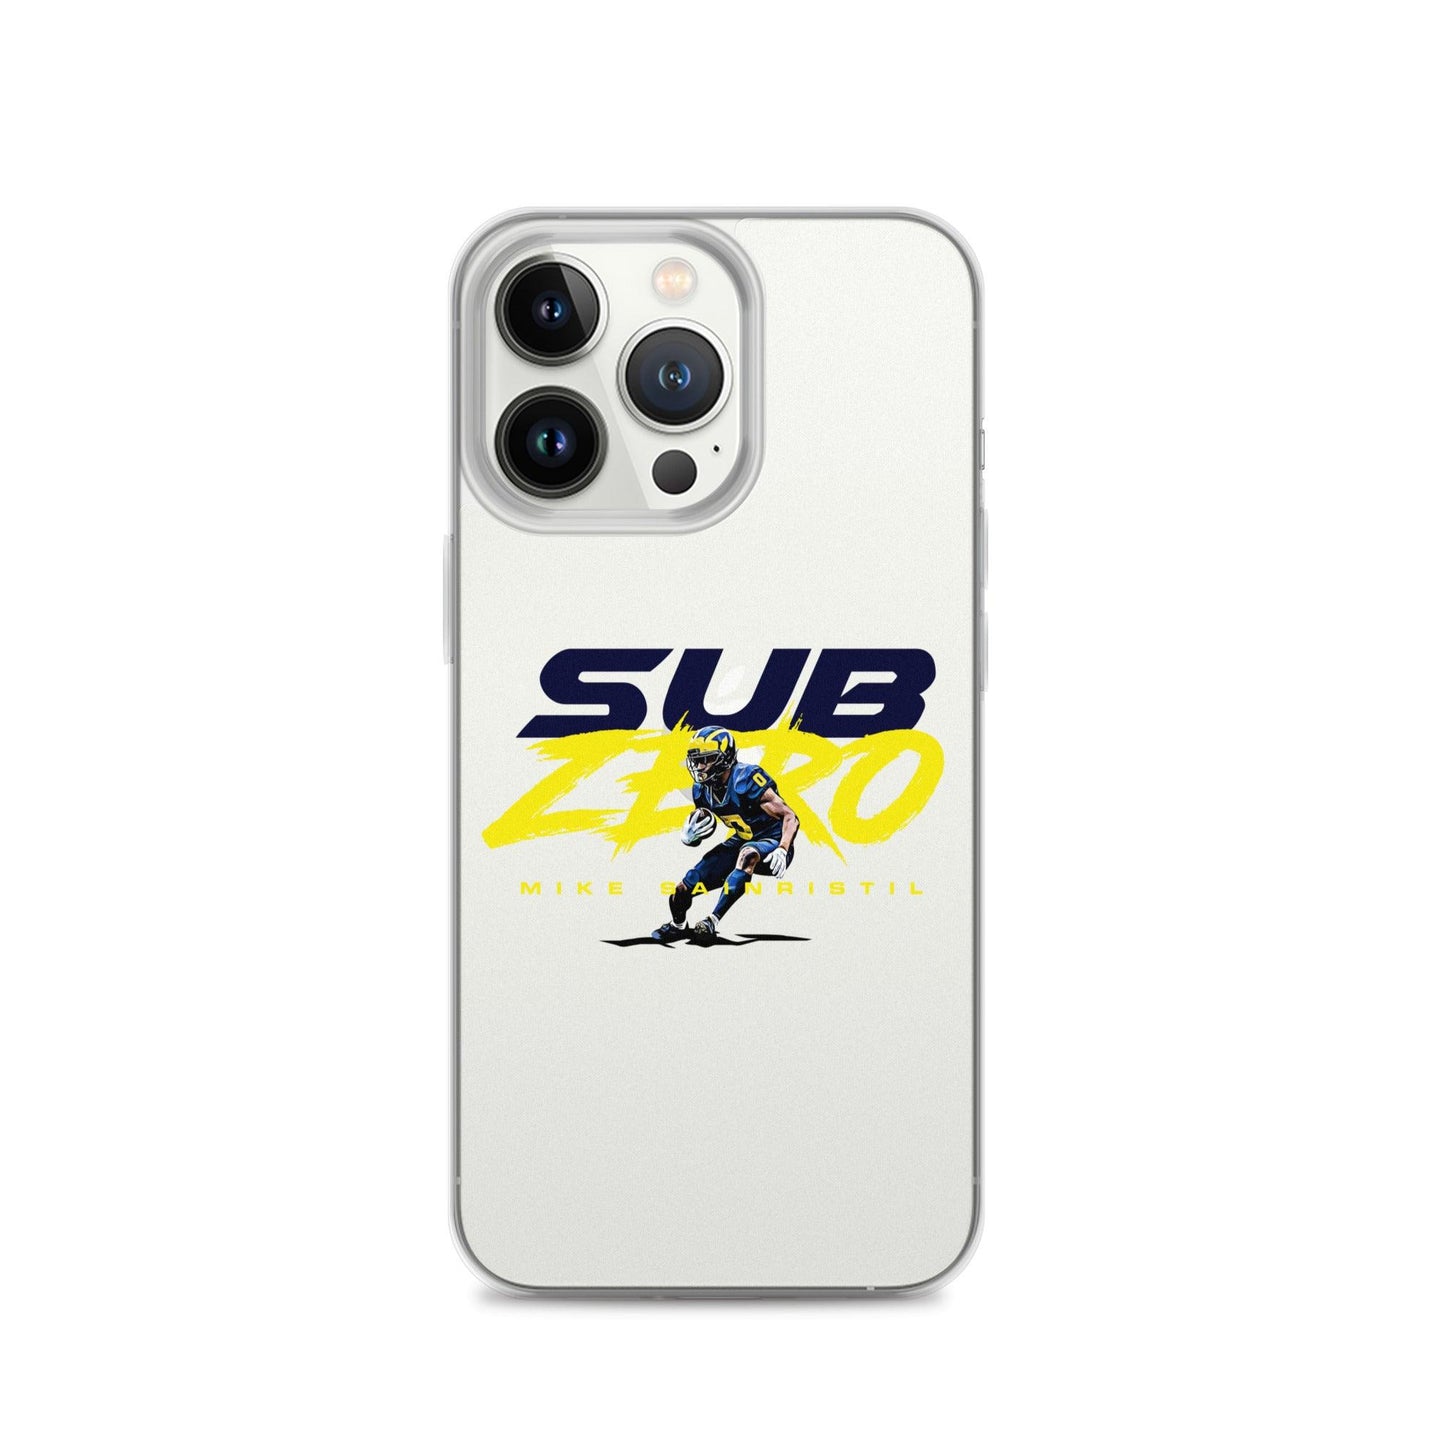 Mike Sainristil "Sub Zero" iPhone Case - Fan Arch